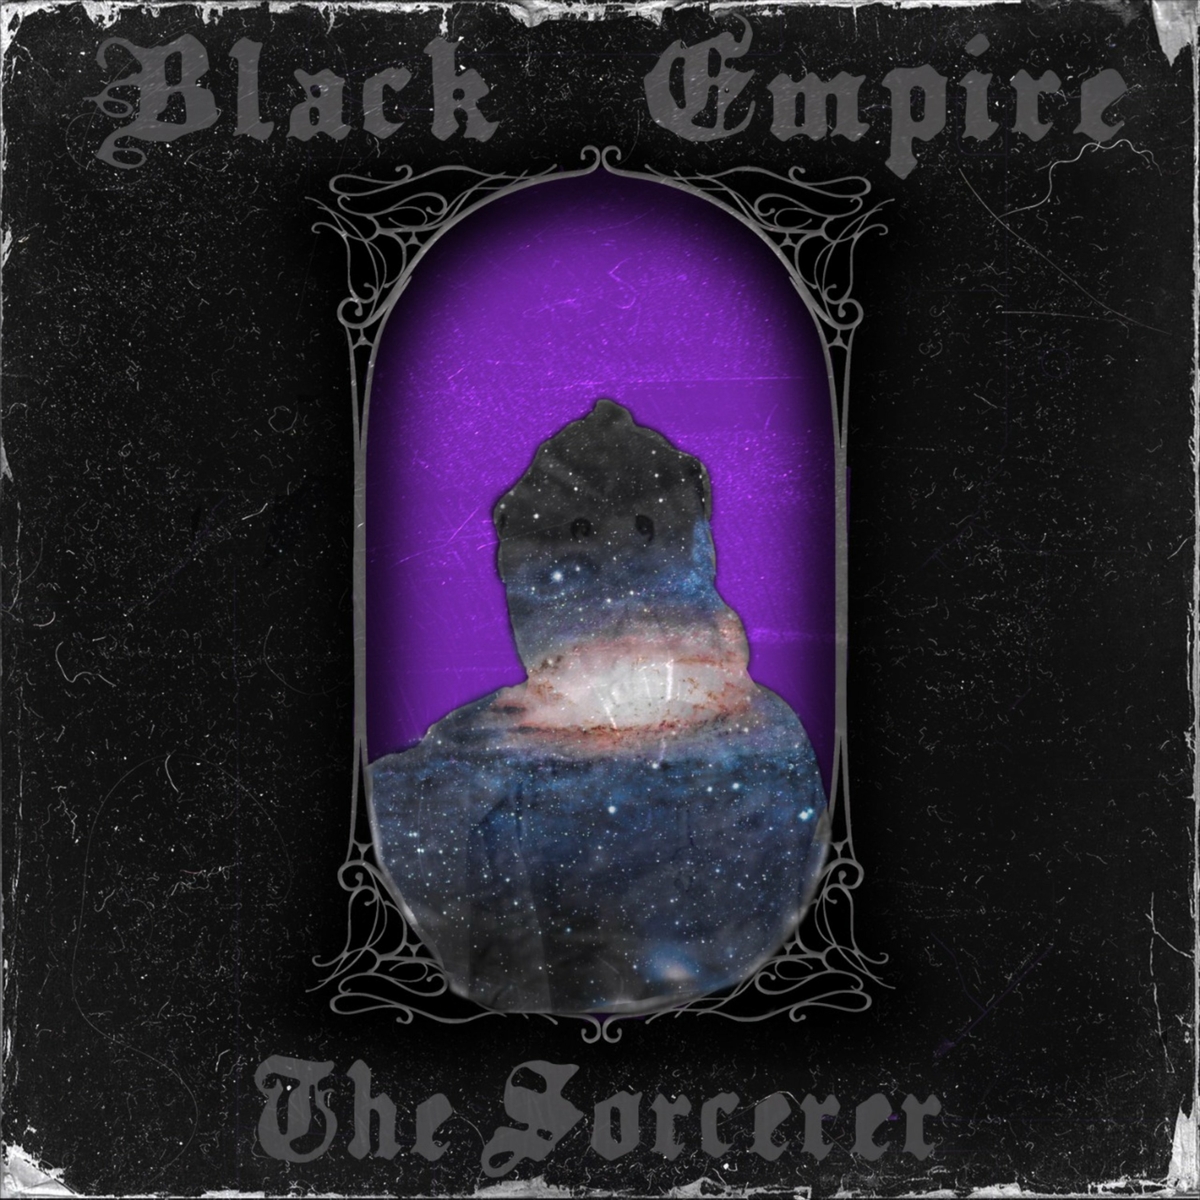 Black Empire - "The Sorcerer" - 2022